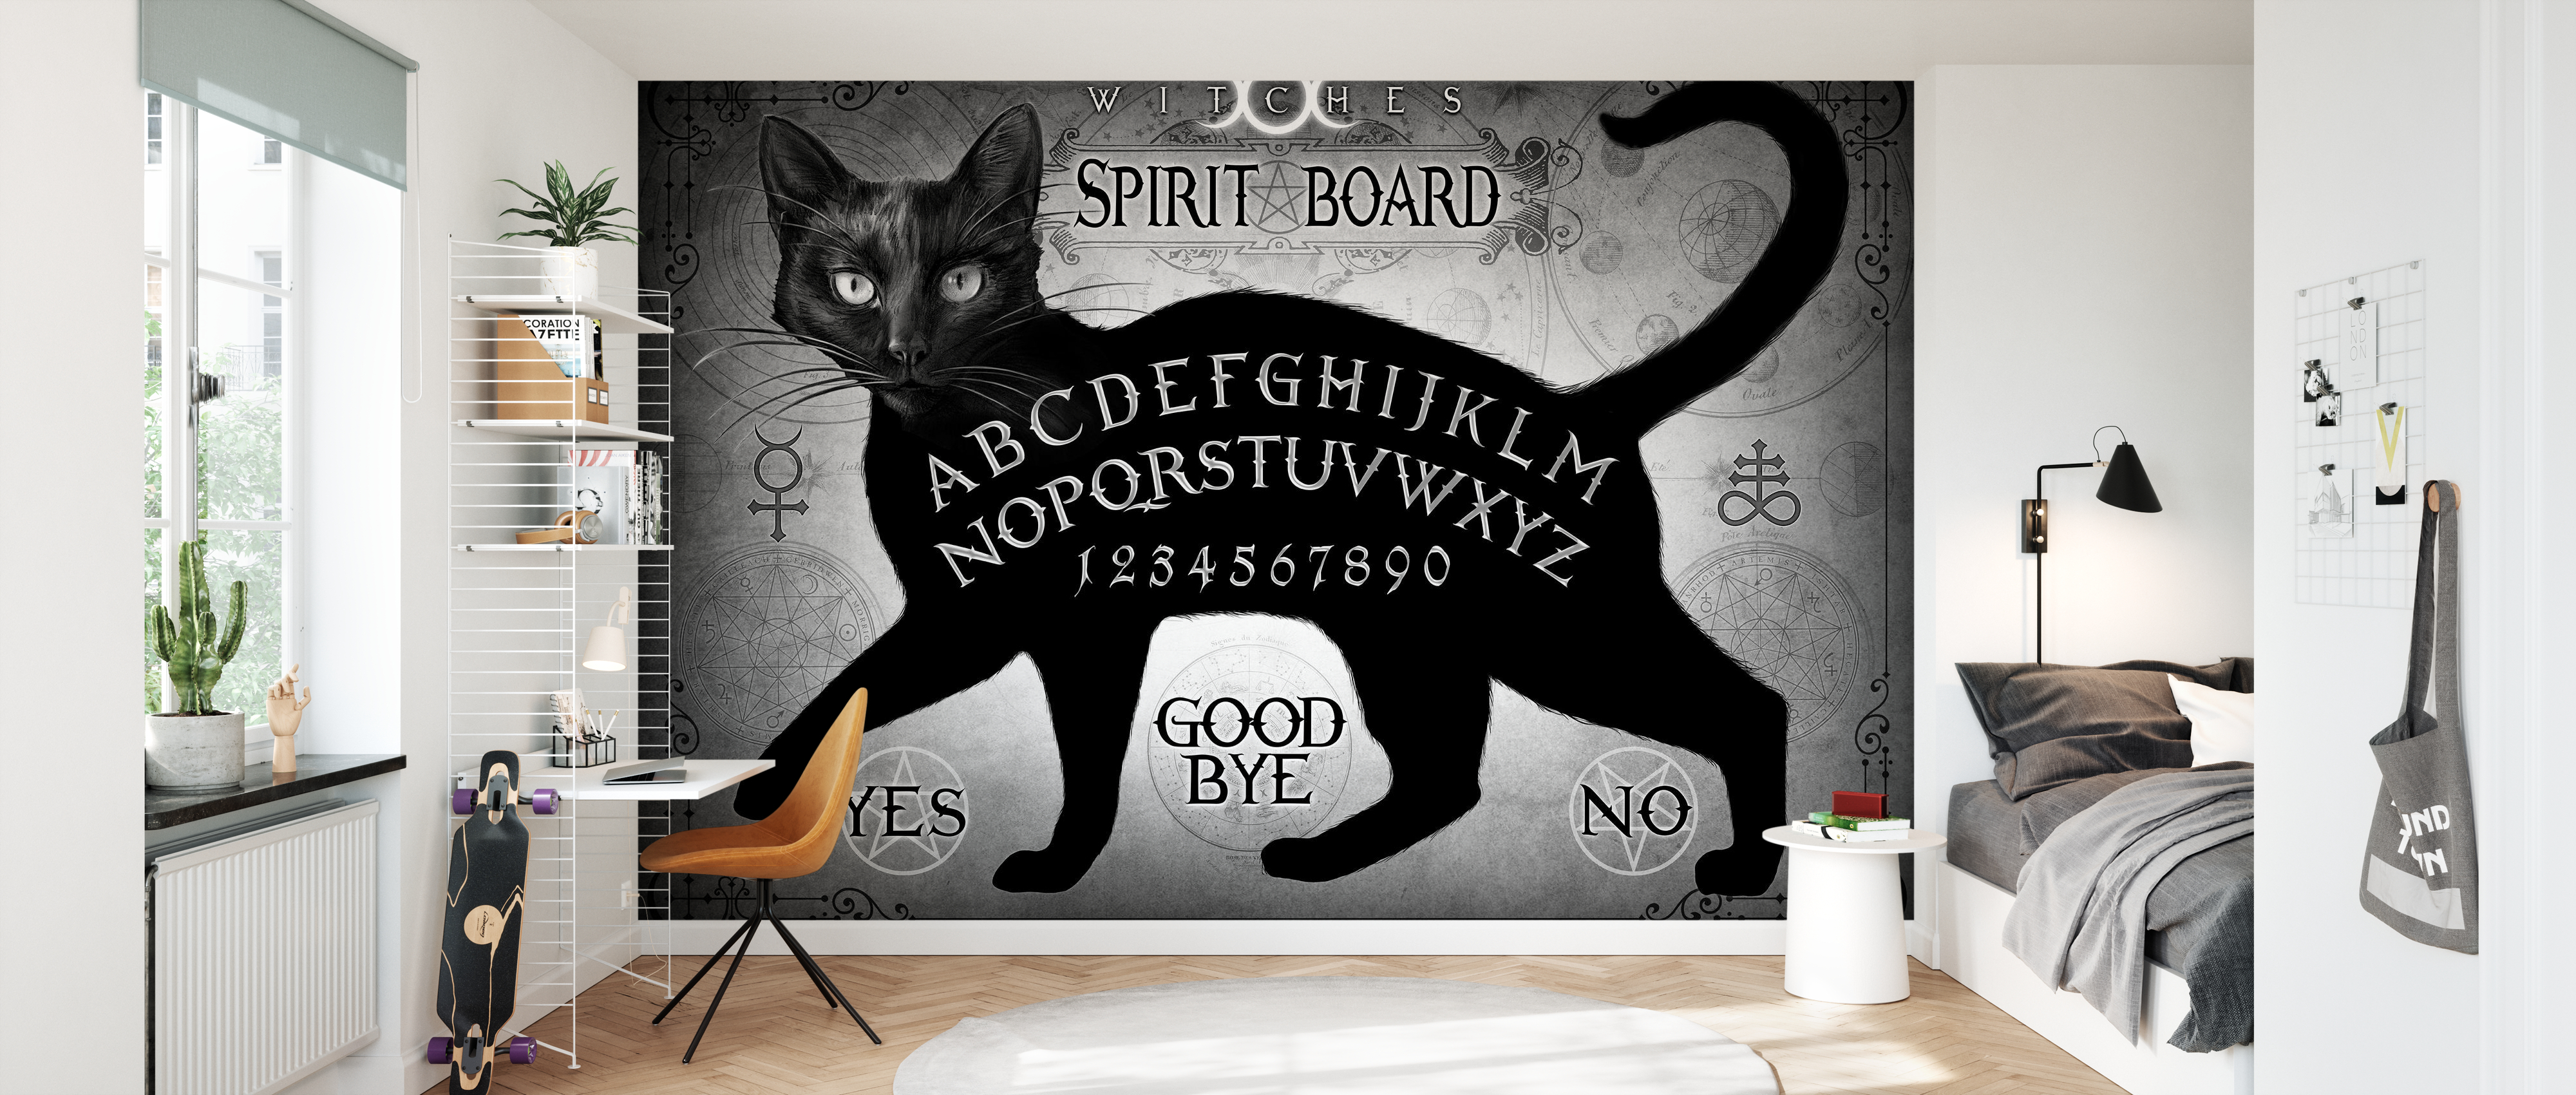 Fototapet Black Cat Spirit Board – Good Bye, personalizat, Photowall Black